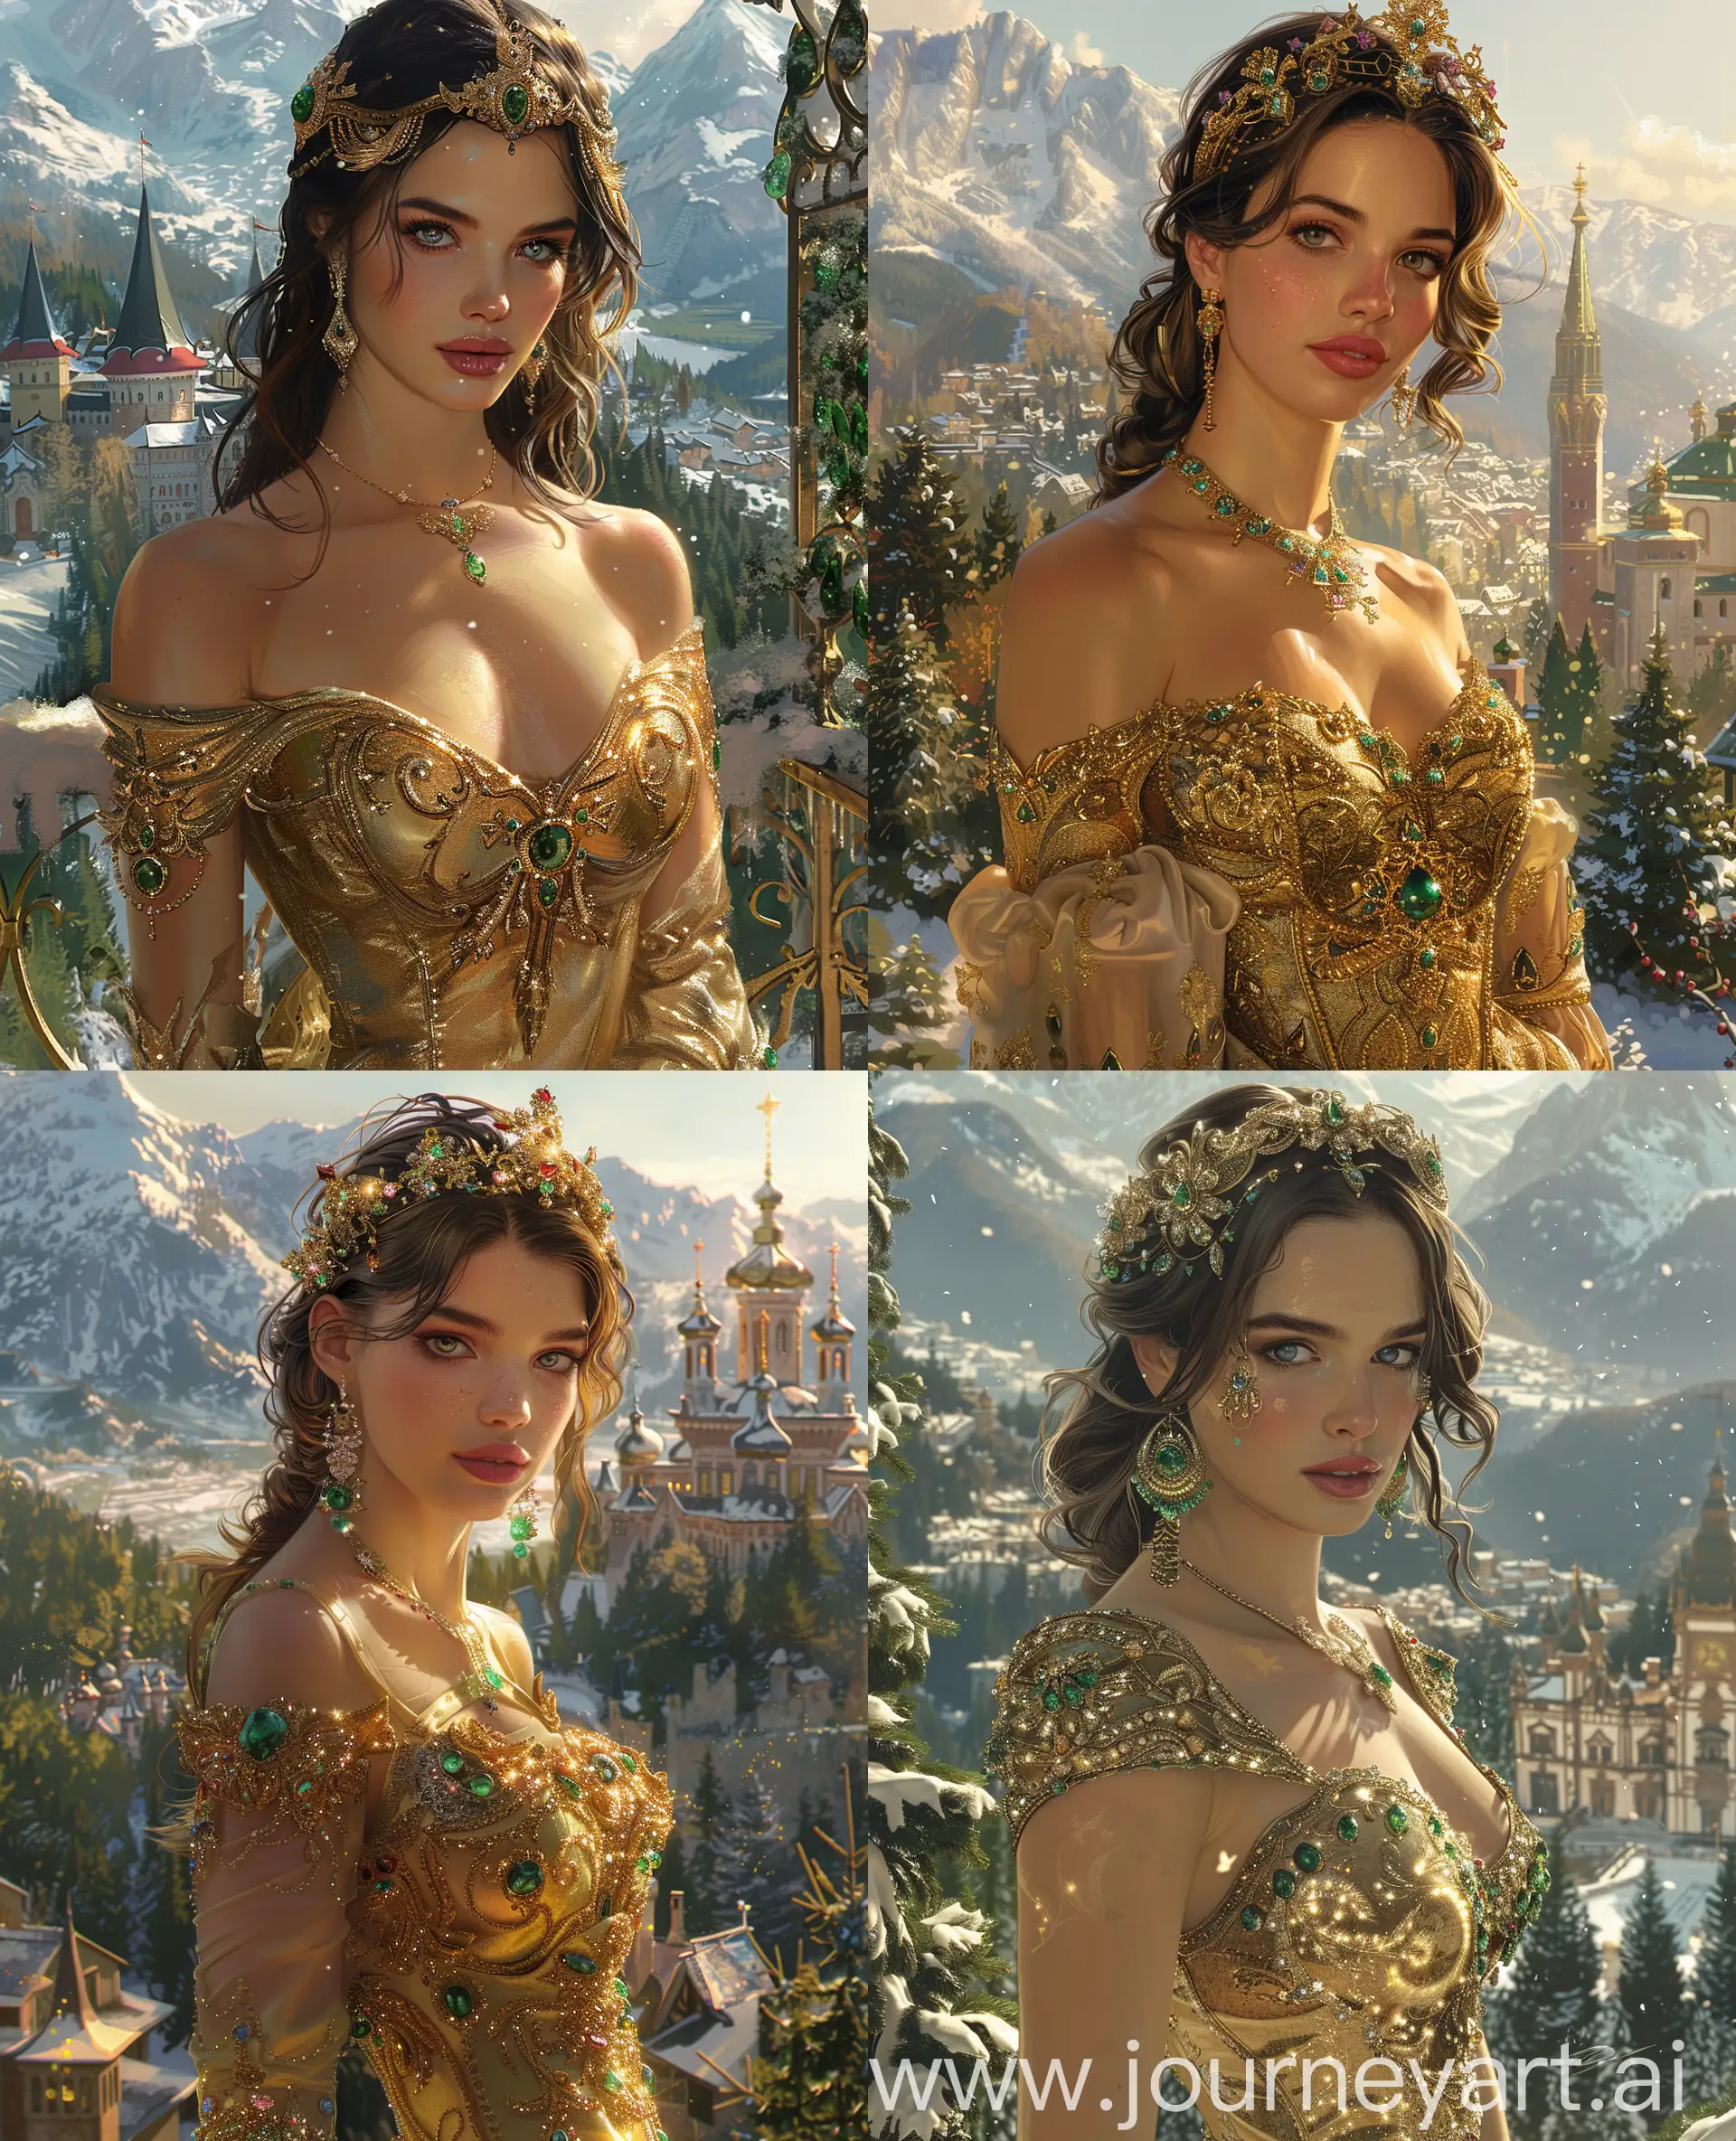 Exquisite-Woman-in-Golden-Dress-Admiring-Enchanting-Kingdom